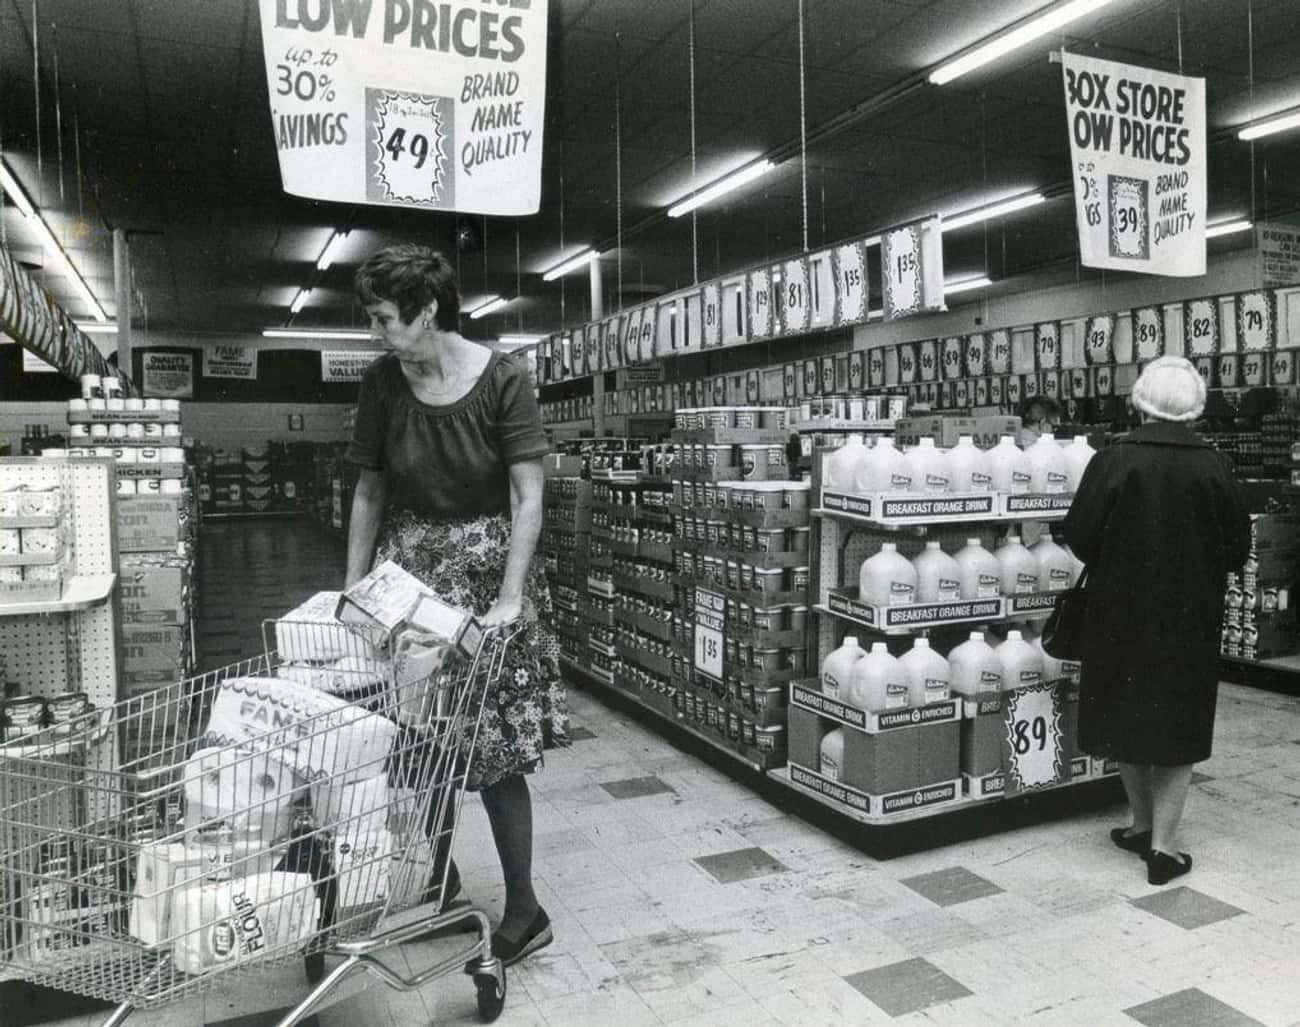 U-Pak Grocery Store, Pontiac, Michigan, 1979